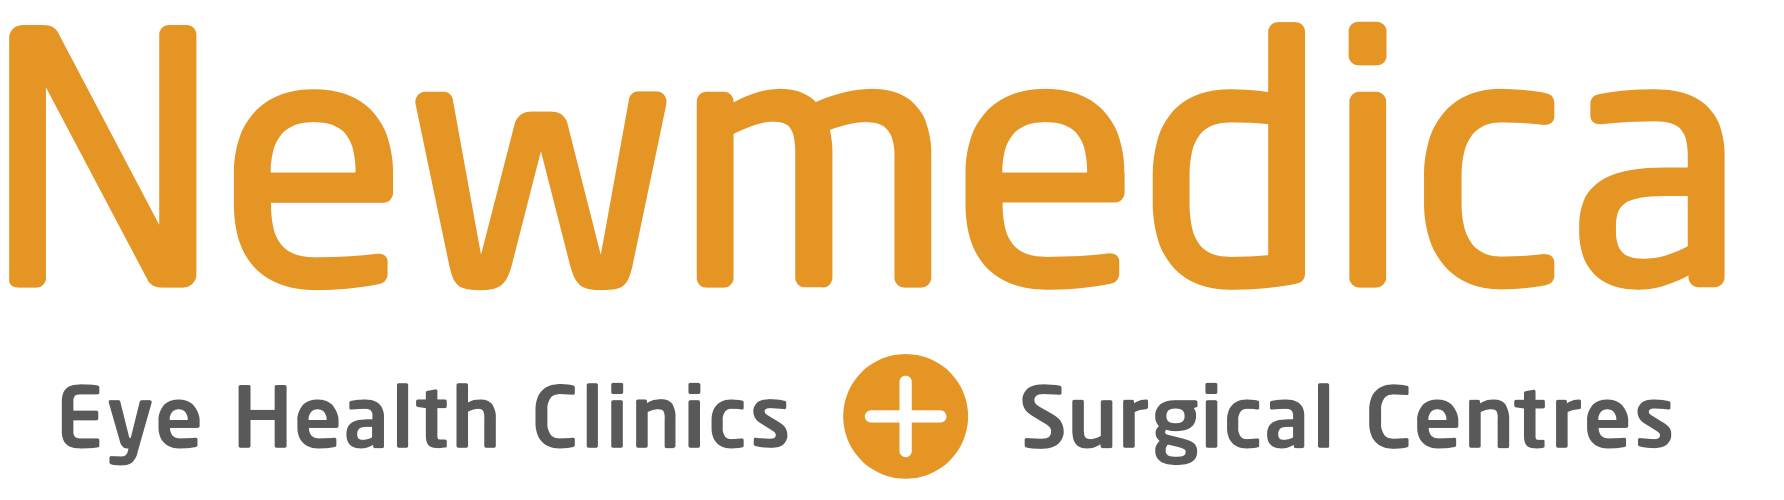 Exeter - Newmedica logo